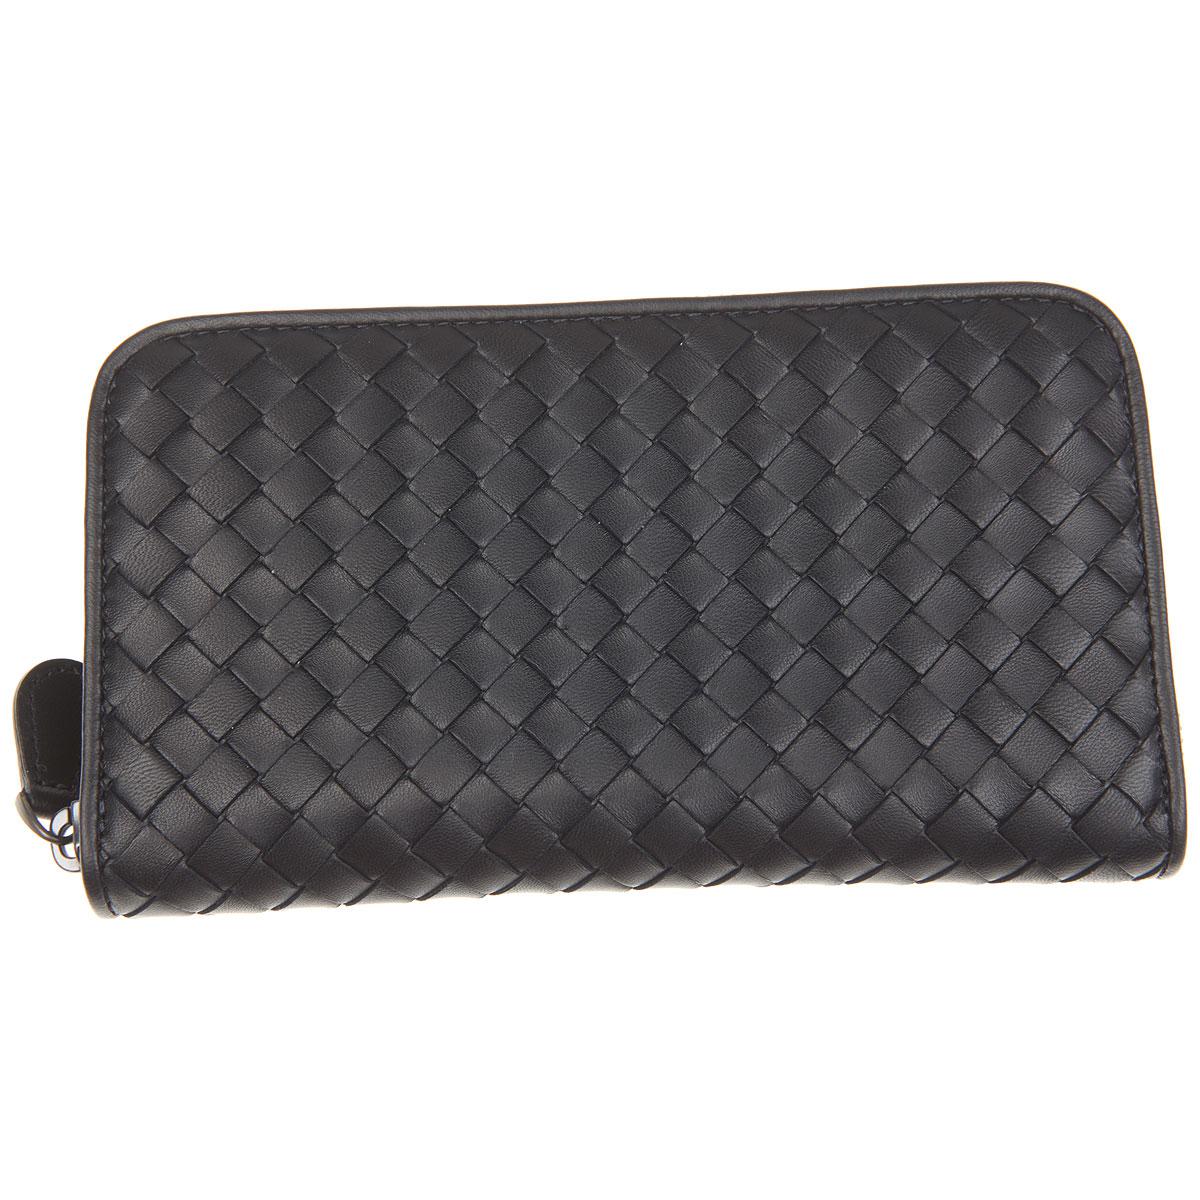 Bottega Veneta Leather Wallet For Women On Sale in Black - Lyst